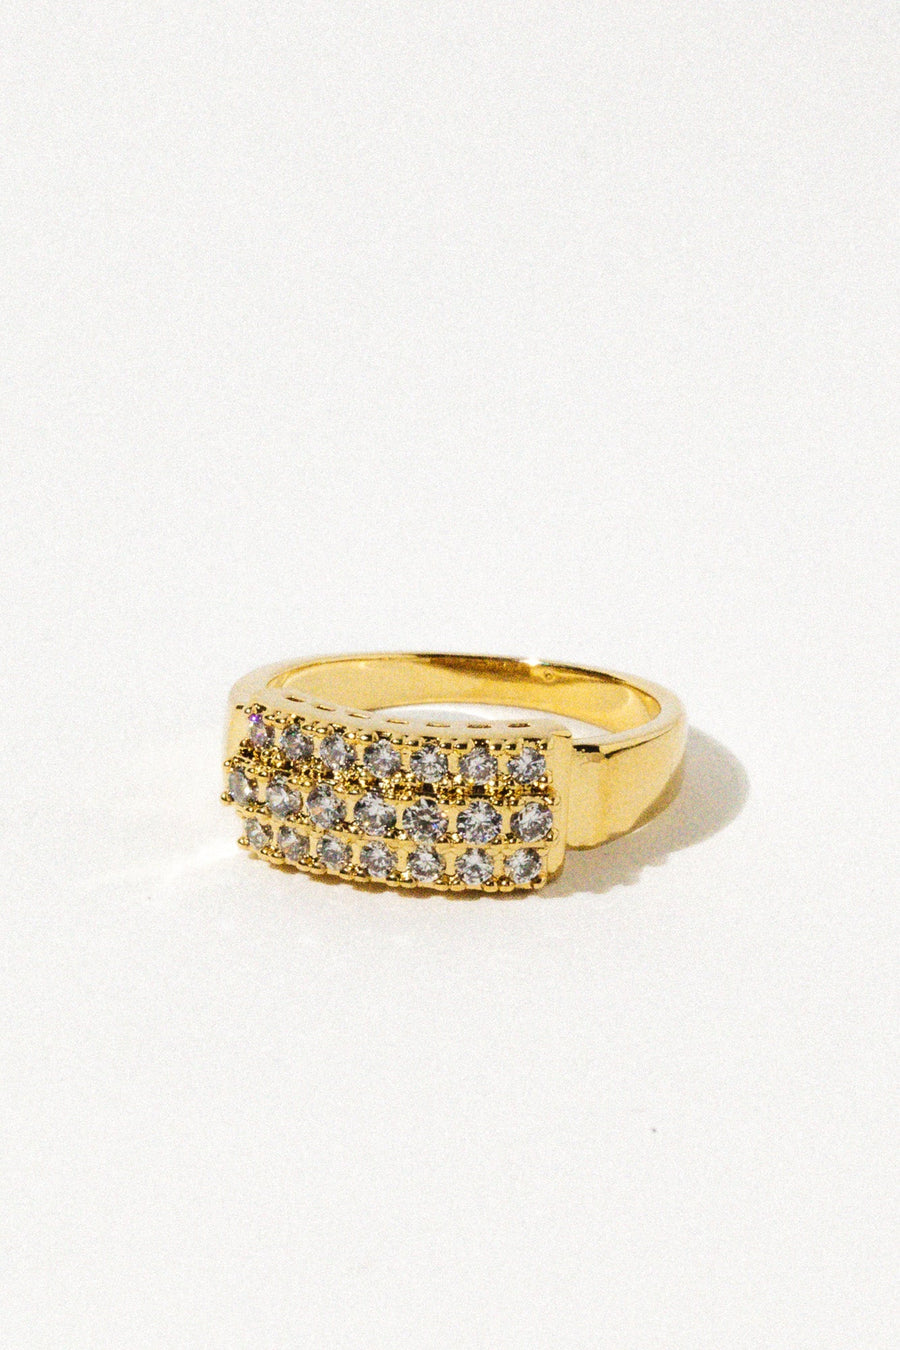 Sparrow Jewelry Gold / US 6 Malibu Honey Ring